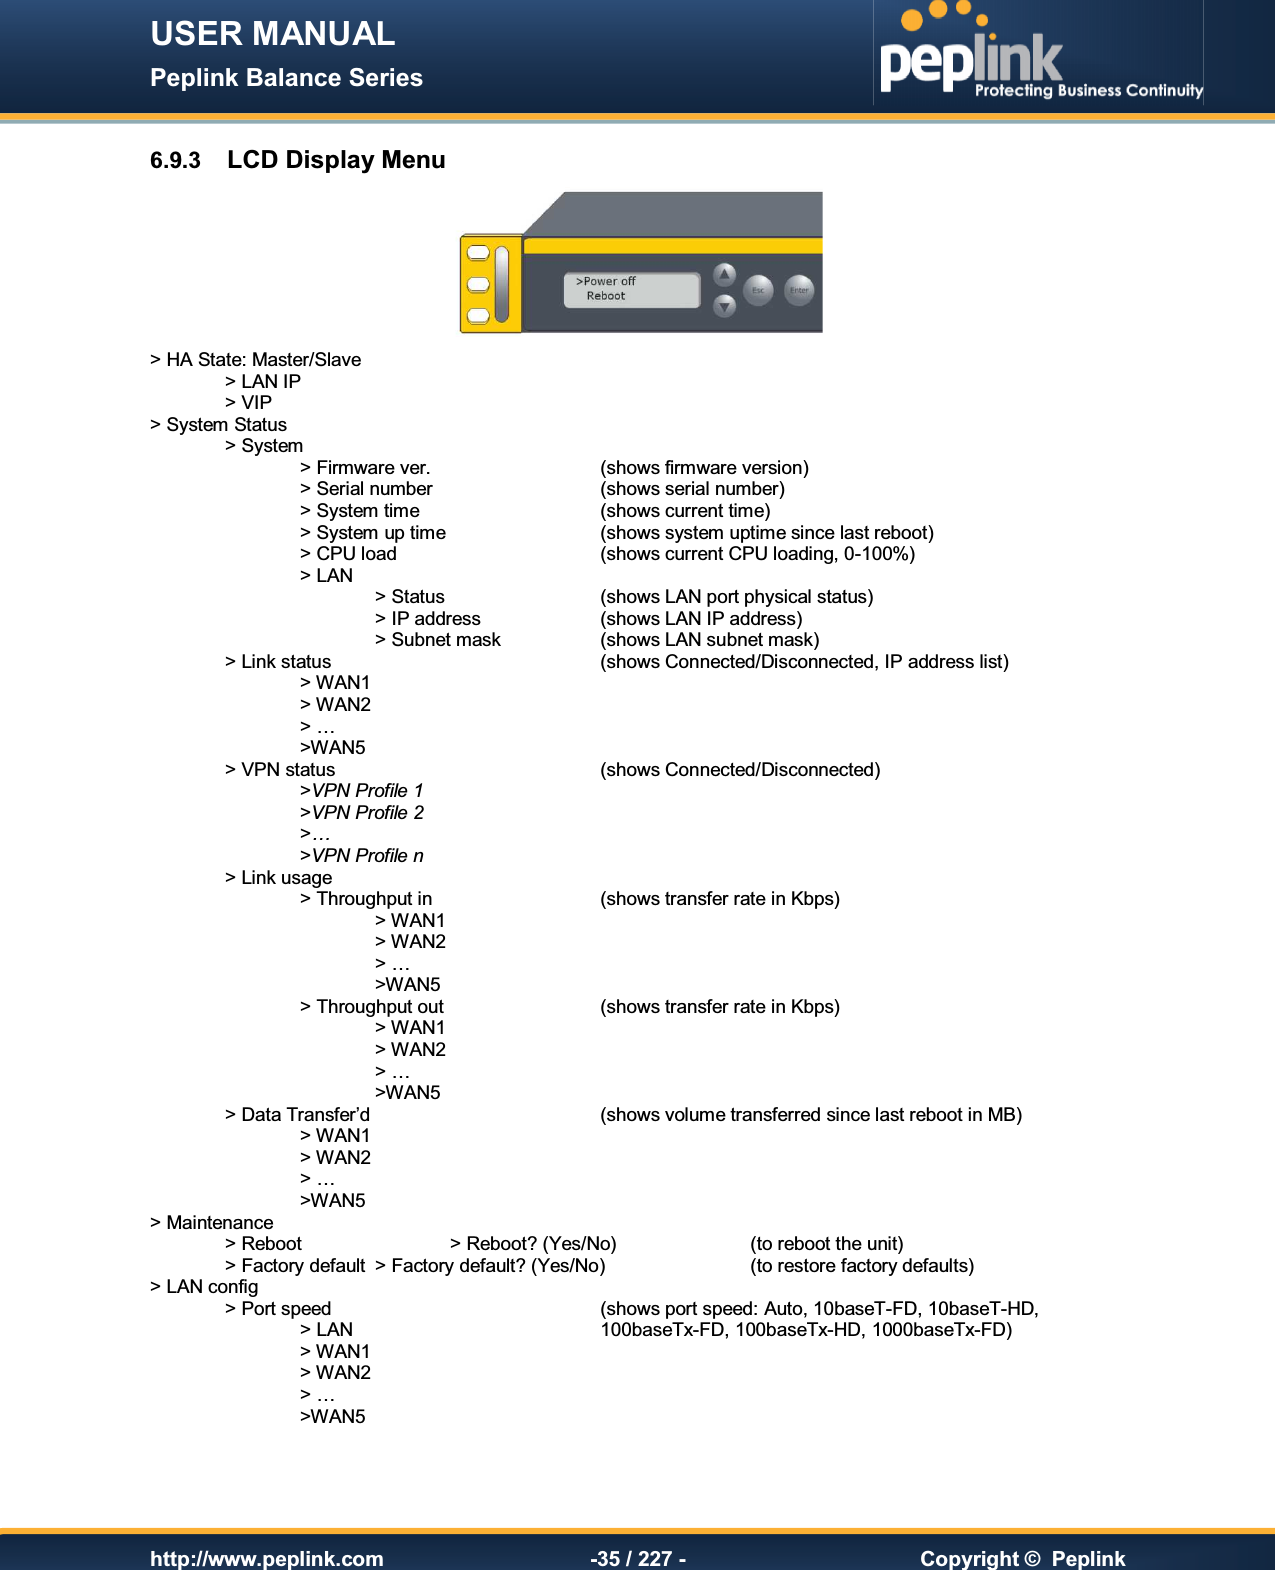 USER MANUAL Peplink Balance Series   http://www.peplink.com -35 / 227 -  Copyright ©  Peplink 6.9.3  LCD Display Menu  &gt; HA State: Master/Slave   &gt; LAN IP   &gt; VIP &gt; System Status     &gt; System         &gt; Firmware ver.        (shows firmware version)     &gt; Serial number      (shows serial number)     &gt; System time      (shows current time)     &gt; System up time     (shows system uptime since last reboot)     &gt; CPU load      (shows current CPU loading, 0-100%)     &gt; LAN         &gt; Status     (shows LAN port physical status)       &gt; IP address    (shows LAN IP address)       &gt; Subnet mask    (shows LAN subnet mask)   &gt; Link status        (shows Connected/Disconnected, IP address list)     &gt; WAN1        &gt; WAN2 &gt; …     &gt;WAN5   &gt; VPN status        (shows Connected/Disconnected)     &gt;VPN Profile 1     &gt;VPN Profile 2     &gt;… &gt;VPN Profile n  &gt; Link usage       &gt; Throughput in      (shows transfer rate in Kbps)       &gt; WAN1        &gt; WAN2 &gt; …       &gt;WAN5     &gt; Throughput out     (shows transfer rate in Kbps)       &gt; WAN1          &gt; WAN2 &gt; …       &gt;WAN5  &gt; Data Transfer’d       (shows volume transferred since last reboot in MB)     &gt; WAN1     &gt; WAN2 &gt; …     &gt;WAN5 &gt; Maintenance     &gt; Reboot    &gt; Reboot? (Yes/No)    (to reboot the unit)   &gt; Factory default  &gt; Factory default? (Yes/No)    (to restore factory defaults)  &gt; LAN config     &gt; Port speed        (shows port speed: Auto, 10baseT-FD, 10baseT-HD,     &gt; LAN        100baseTx-FD, 100baseTx-HD, 1000baseTx-FD)     &gt; WAN1          &gt; WAN2 &gt; …     &gt;WAN5  